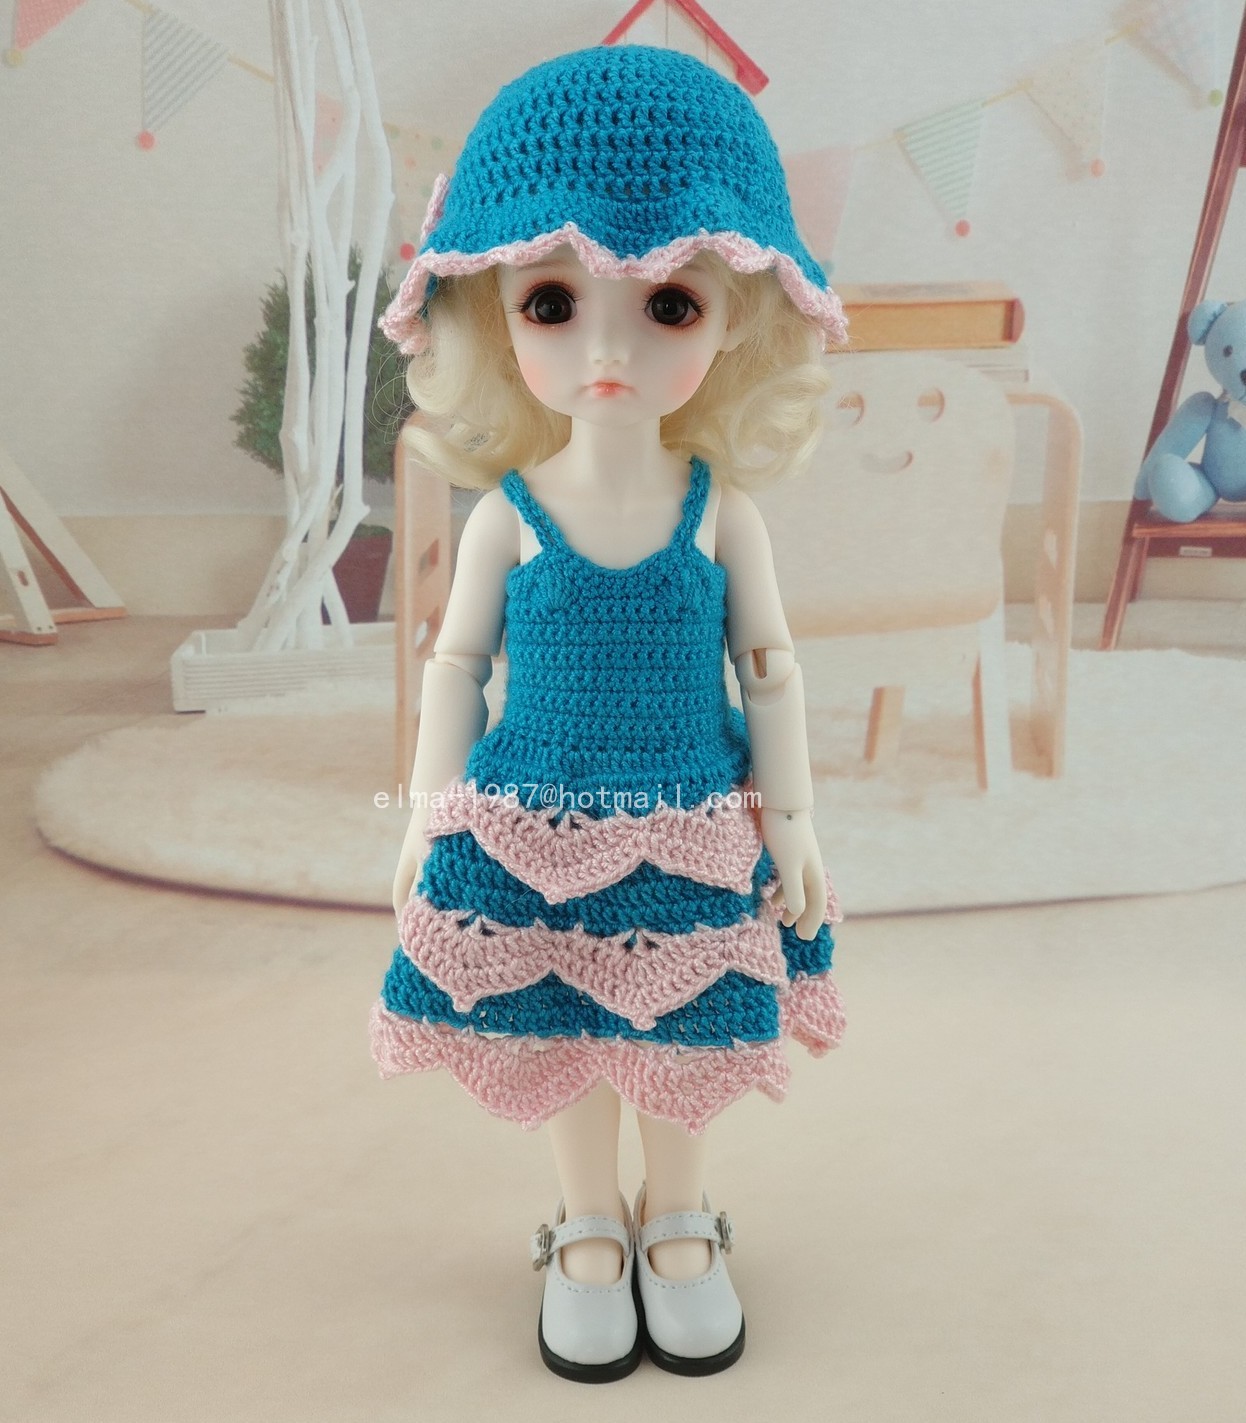 Blue crochet dress set for 1/6 size BJD